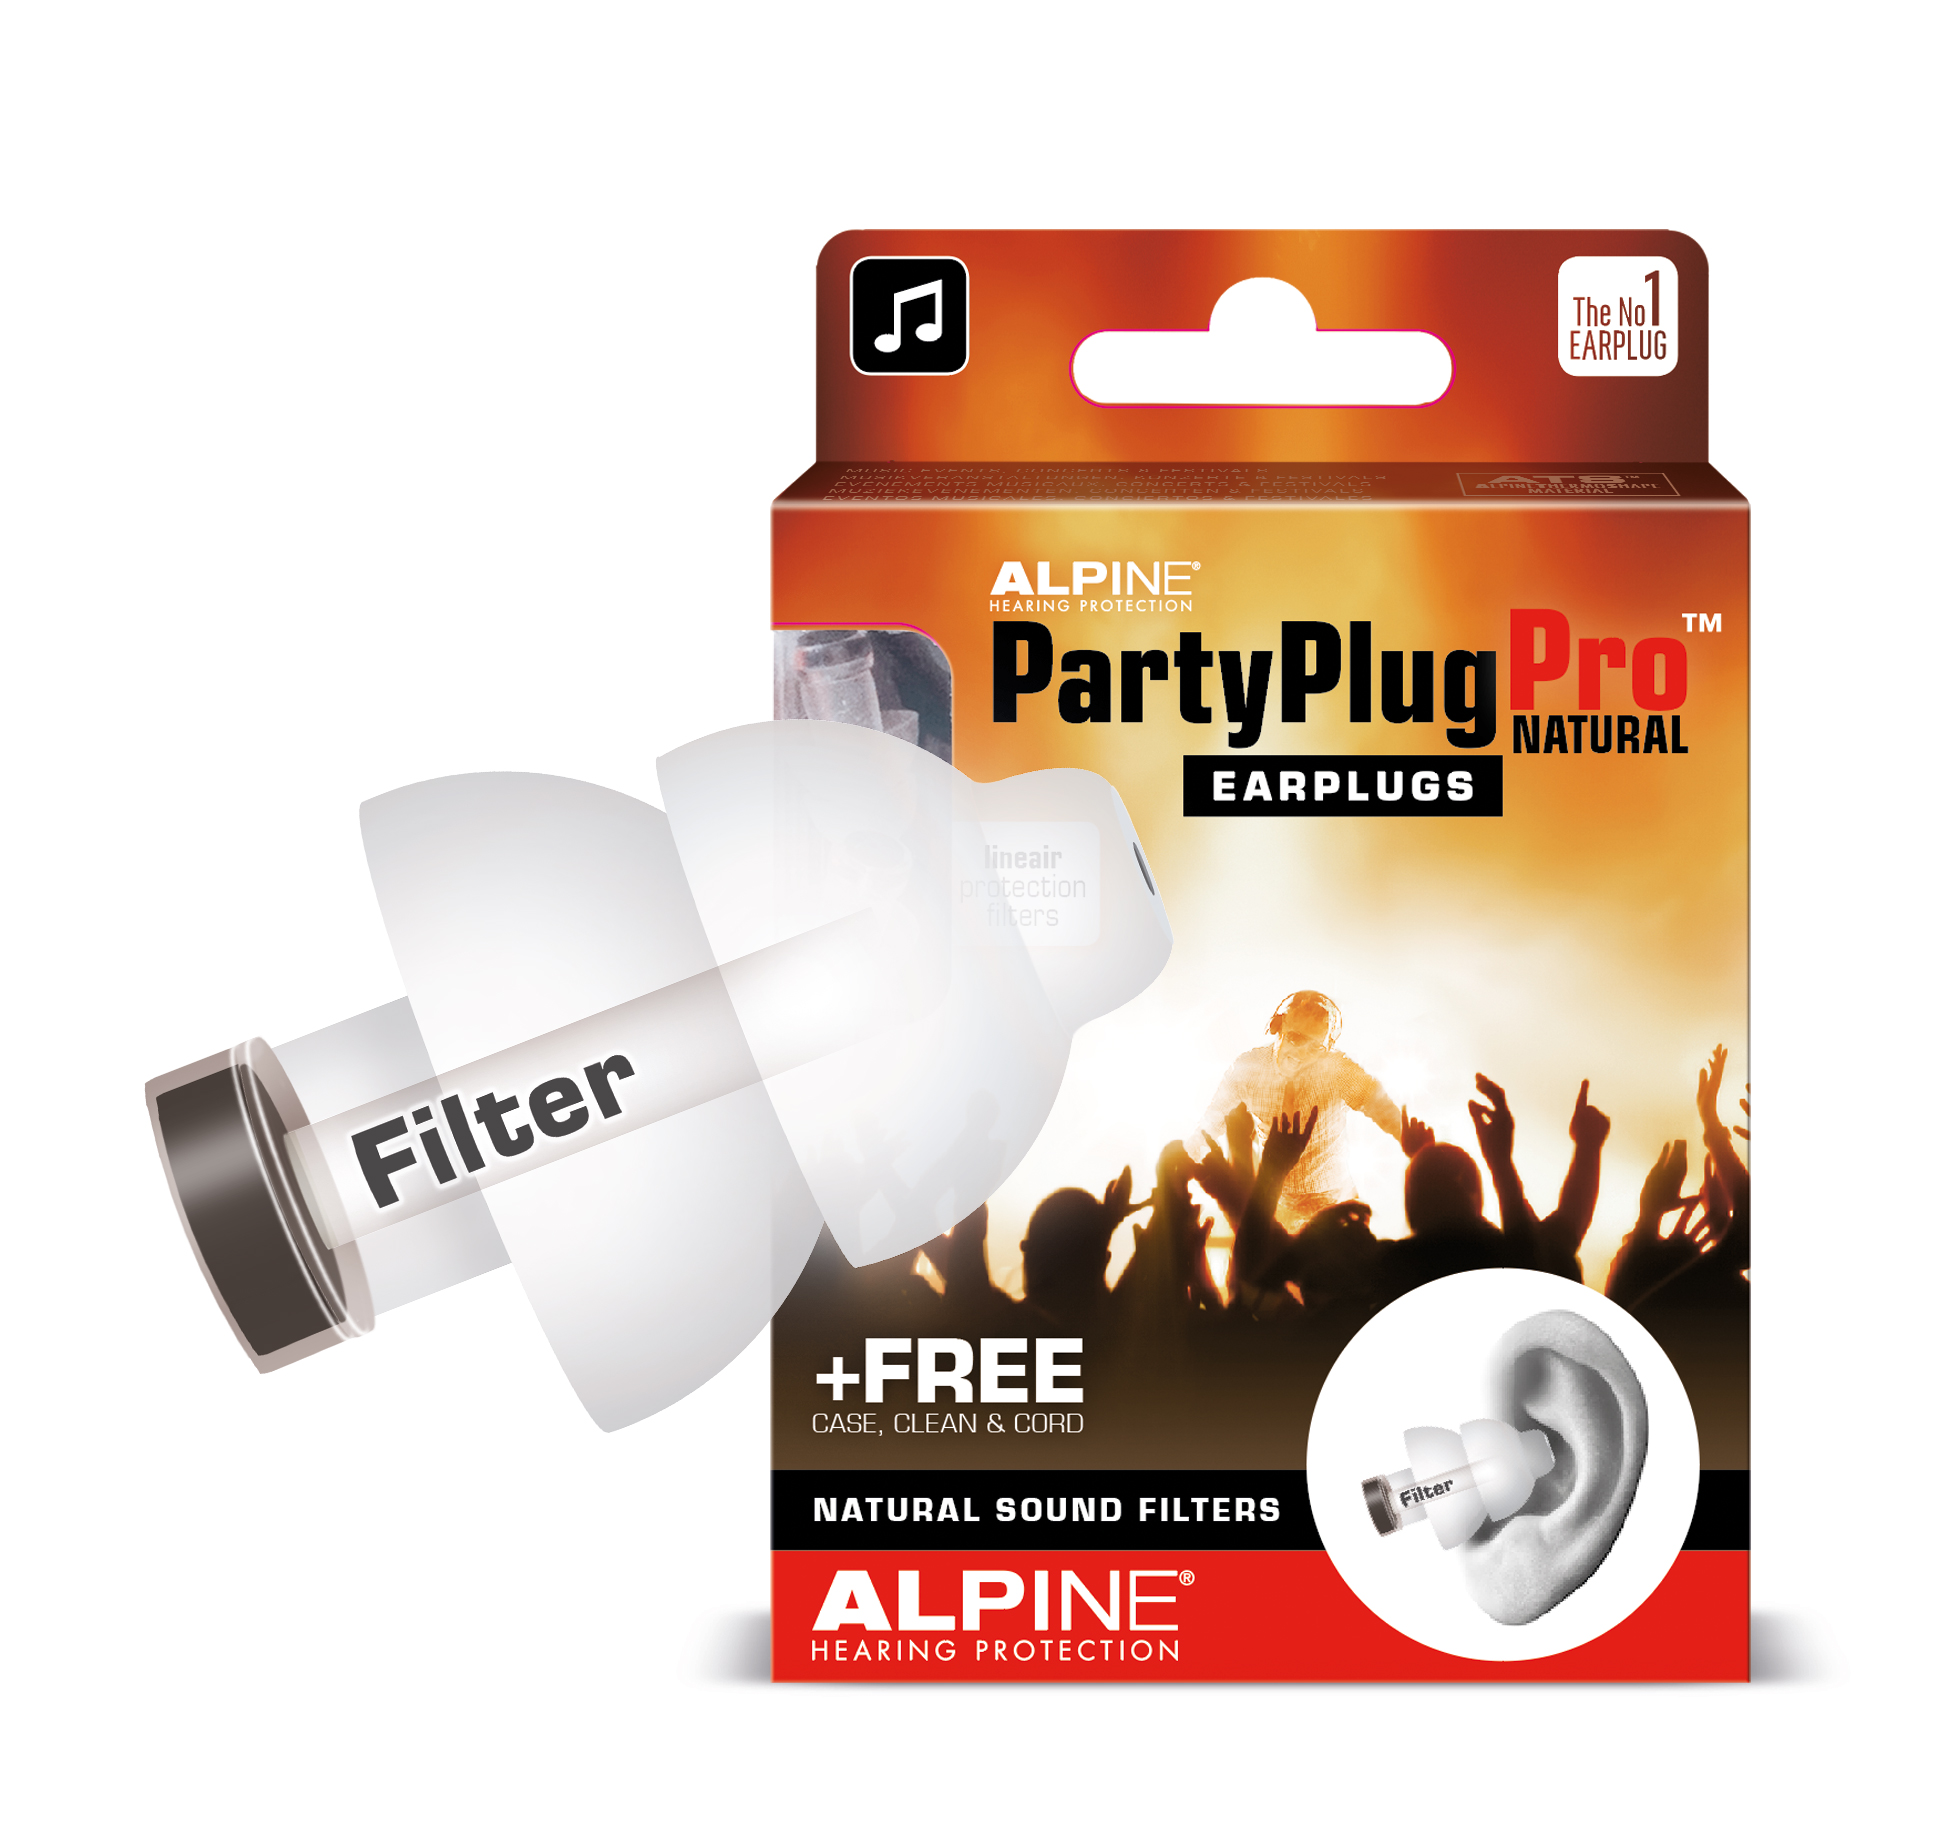 Alpine PartyPlug Pro Natural with earplug